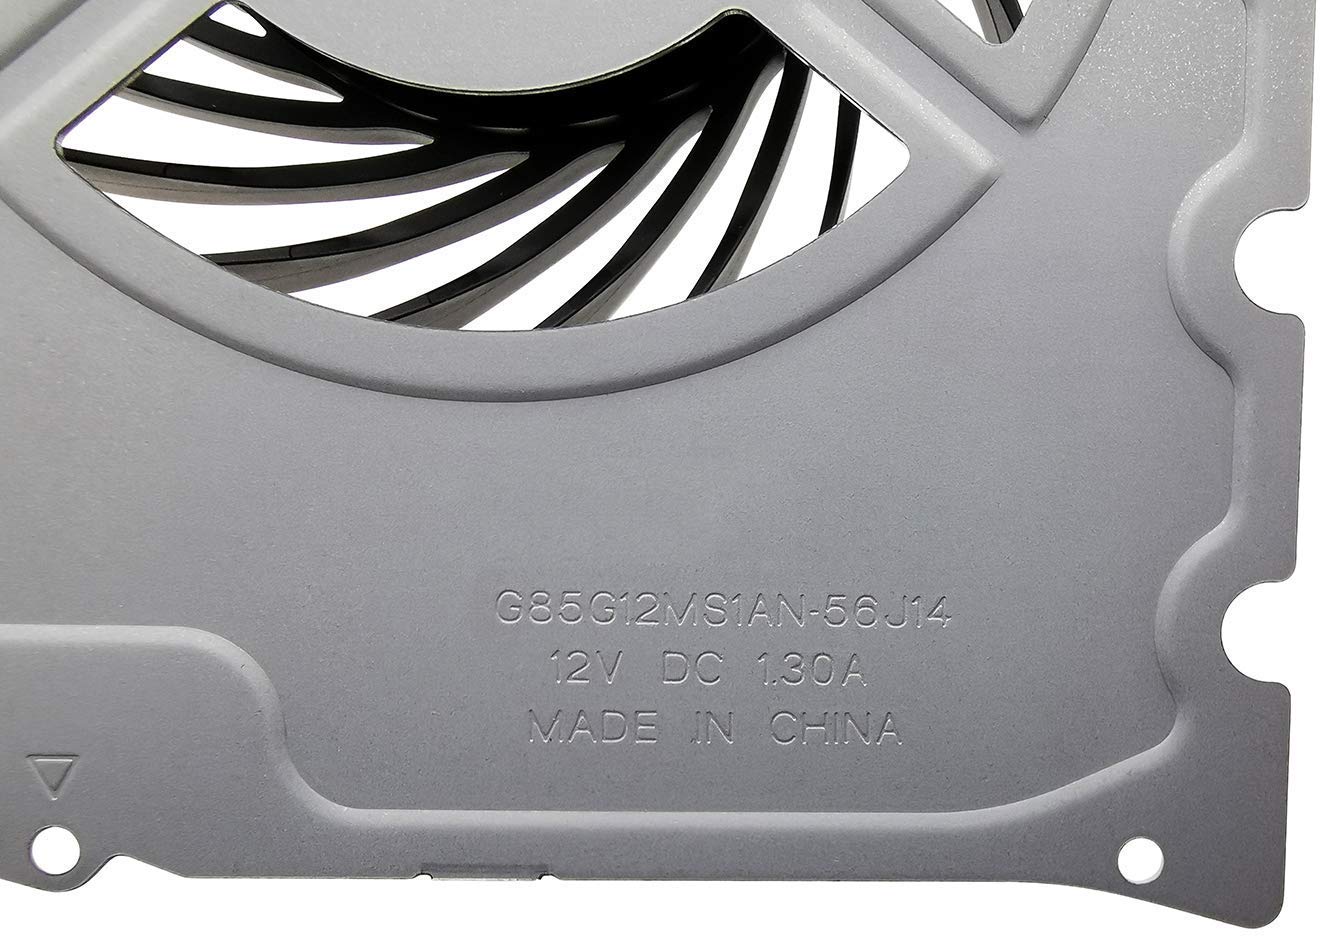 New Replacement Internal Fan CPU Cooling Fan for Sony PS4 Slim CUH-2015A CUH-2016A CUH-2017A CUH-2115B CUH-2000 CUH-2XXX Series G85G12MS1CN-56J14 G85G12MS1AN-56J14 KSB0912HD Fan with Screwdrivers